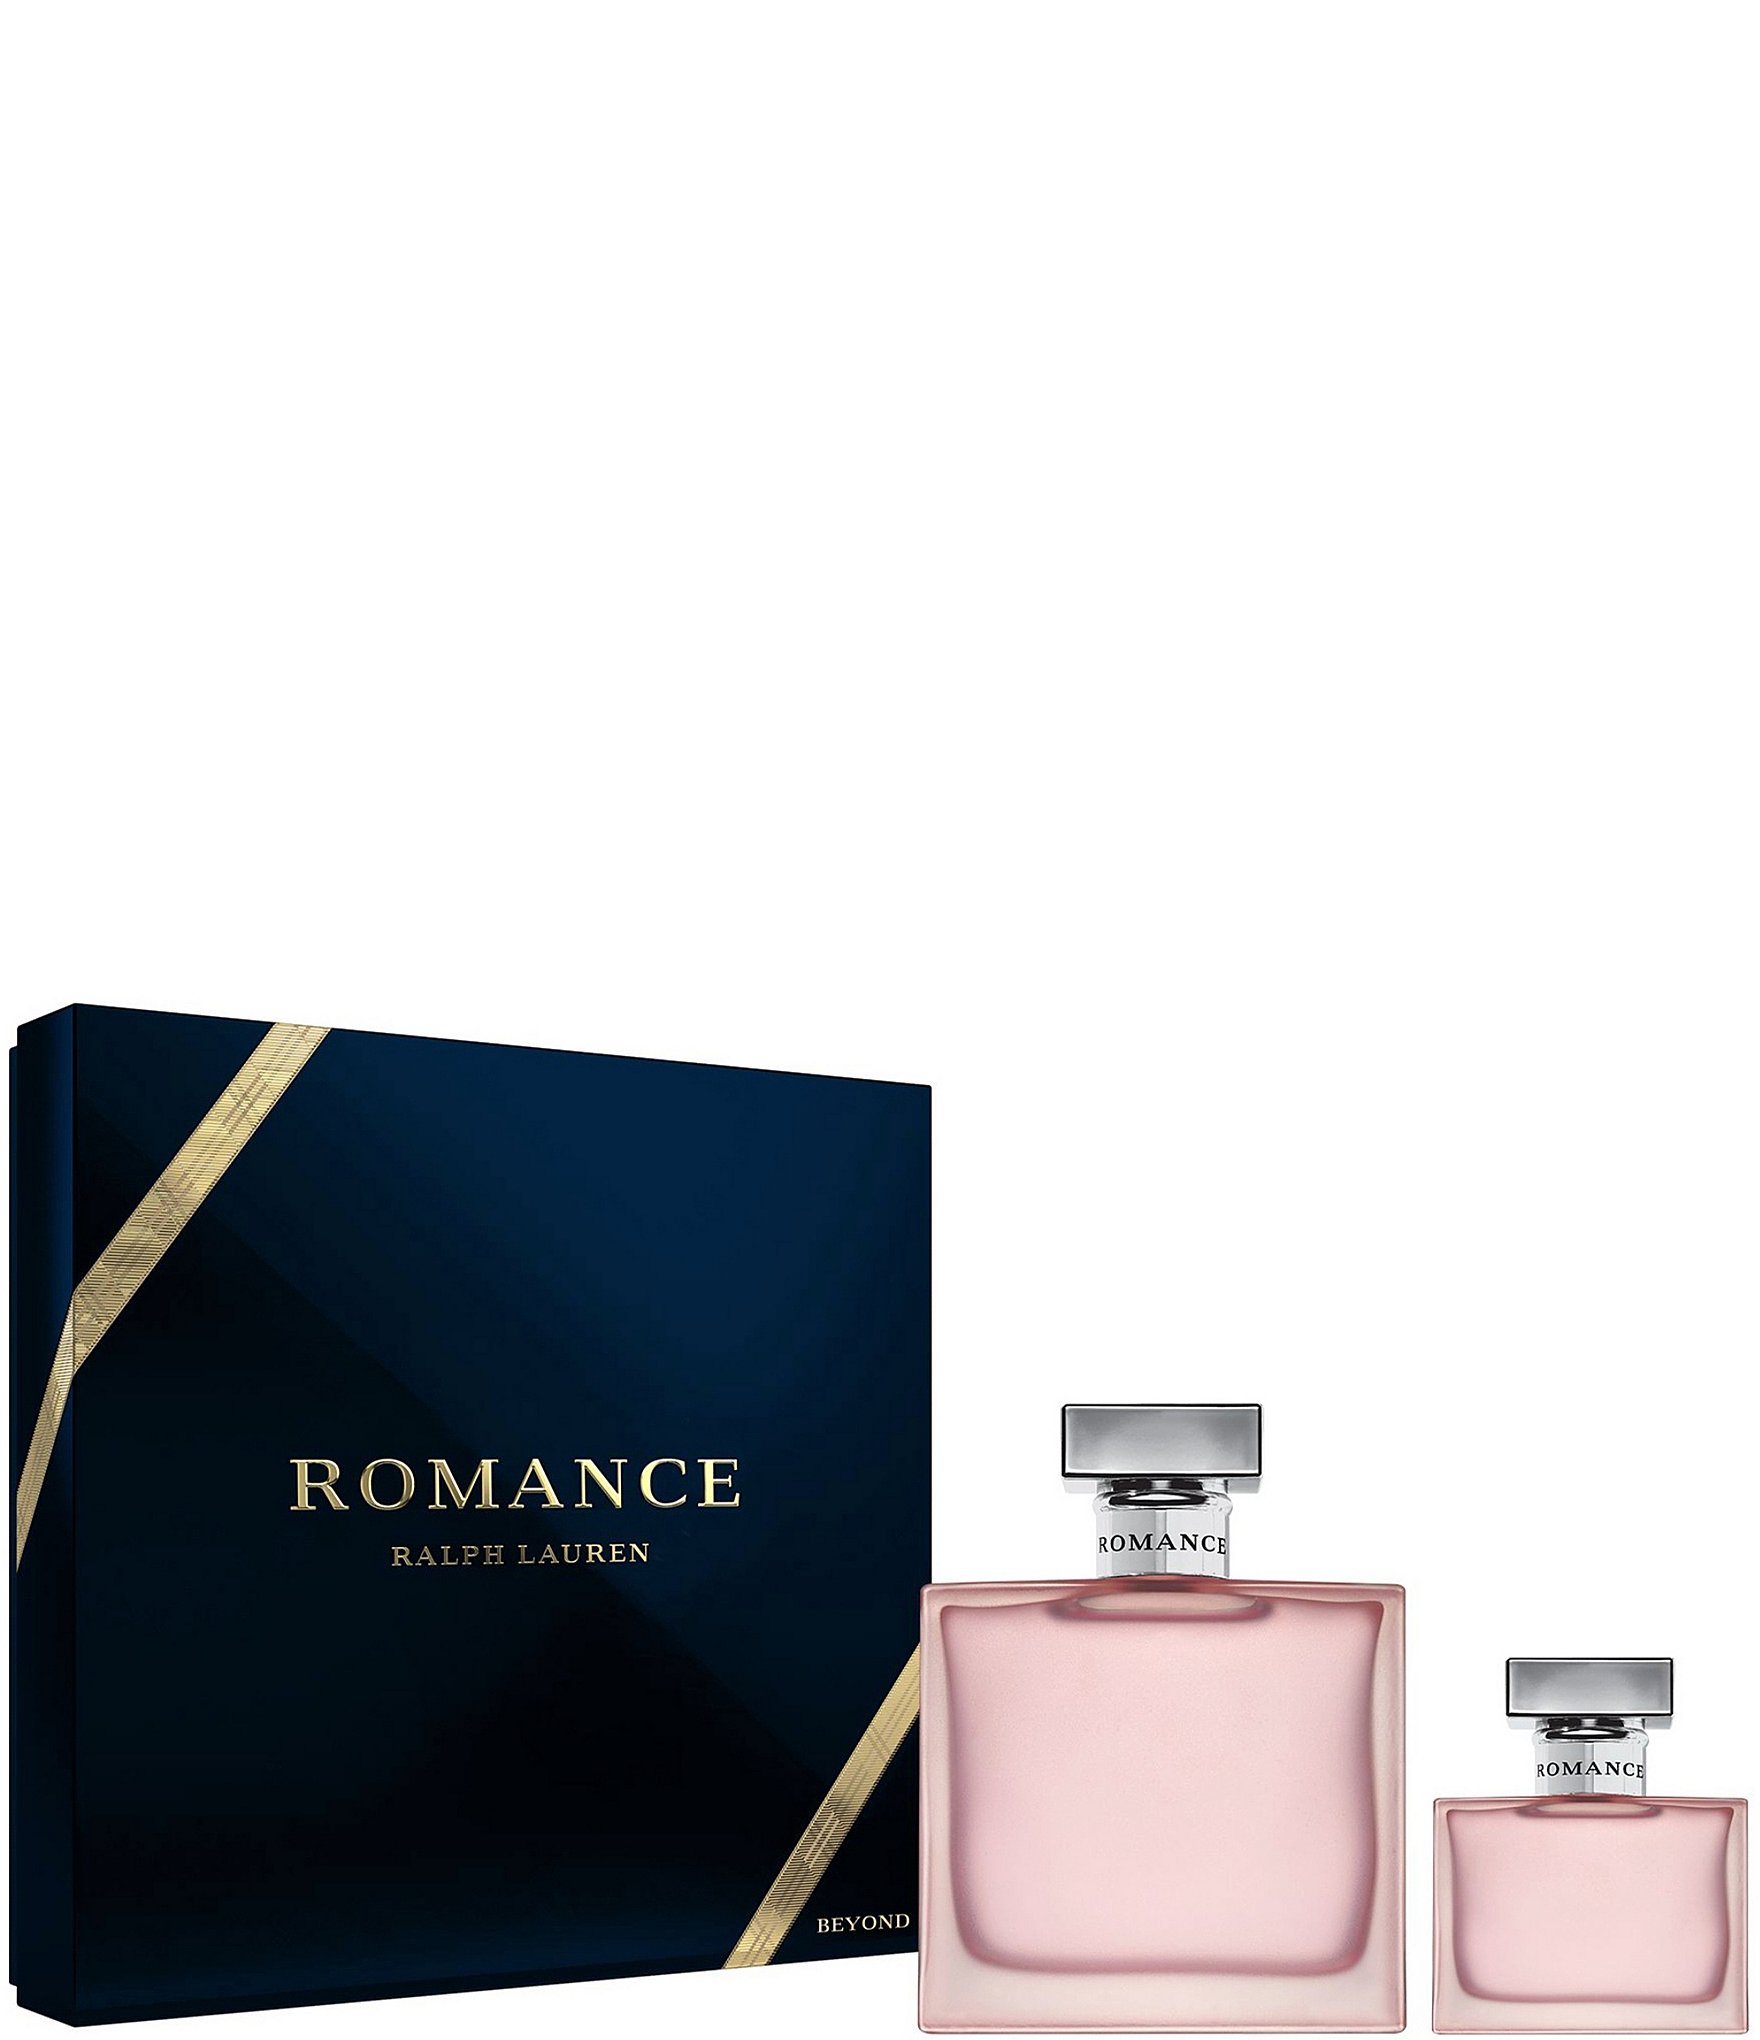 Beyond Romance by Ralph Lauren: Fragrance Review 